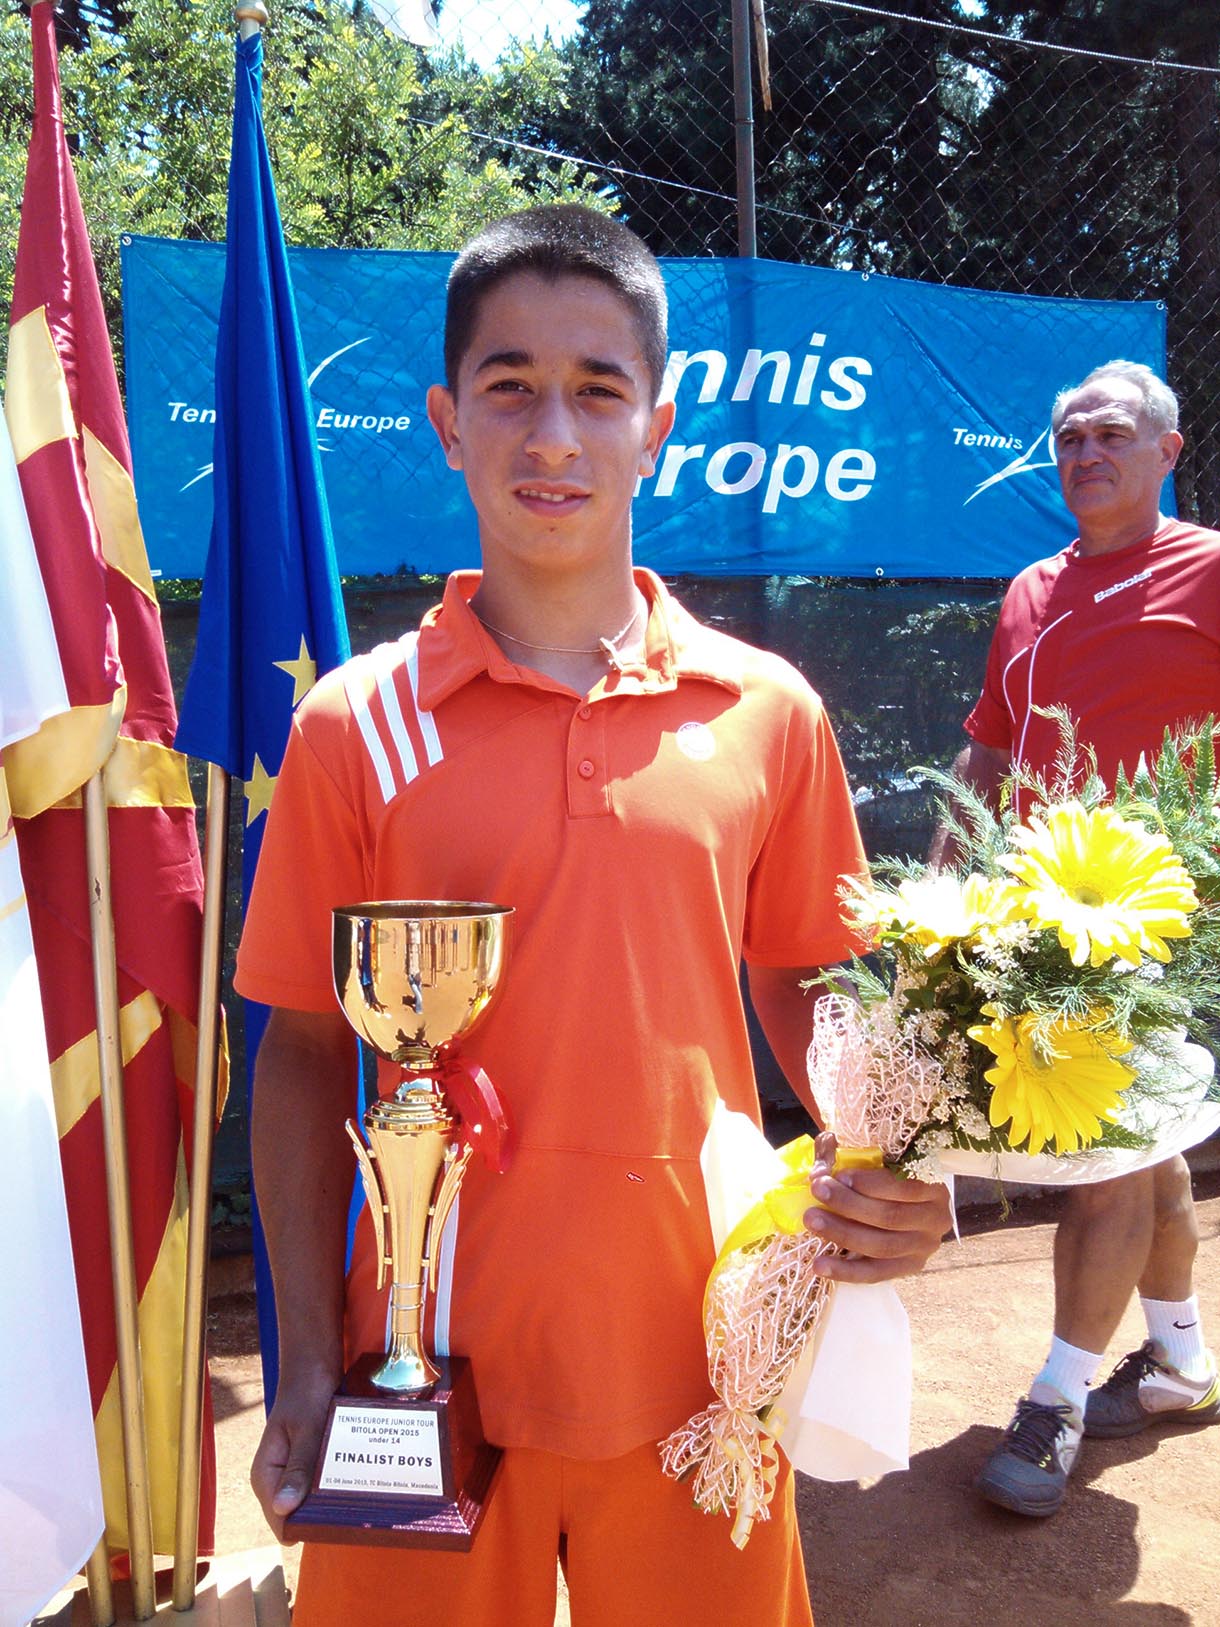 Luka Stefanović nastavlja seriju uspeha na Tennis Europe turnirima